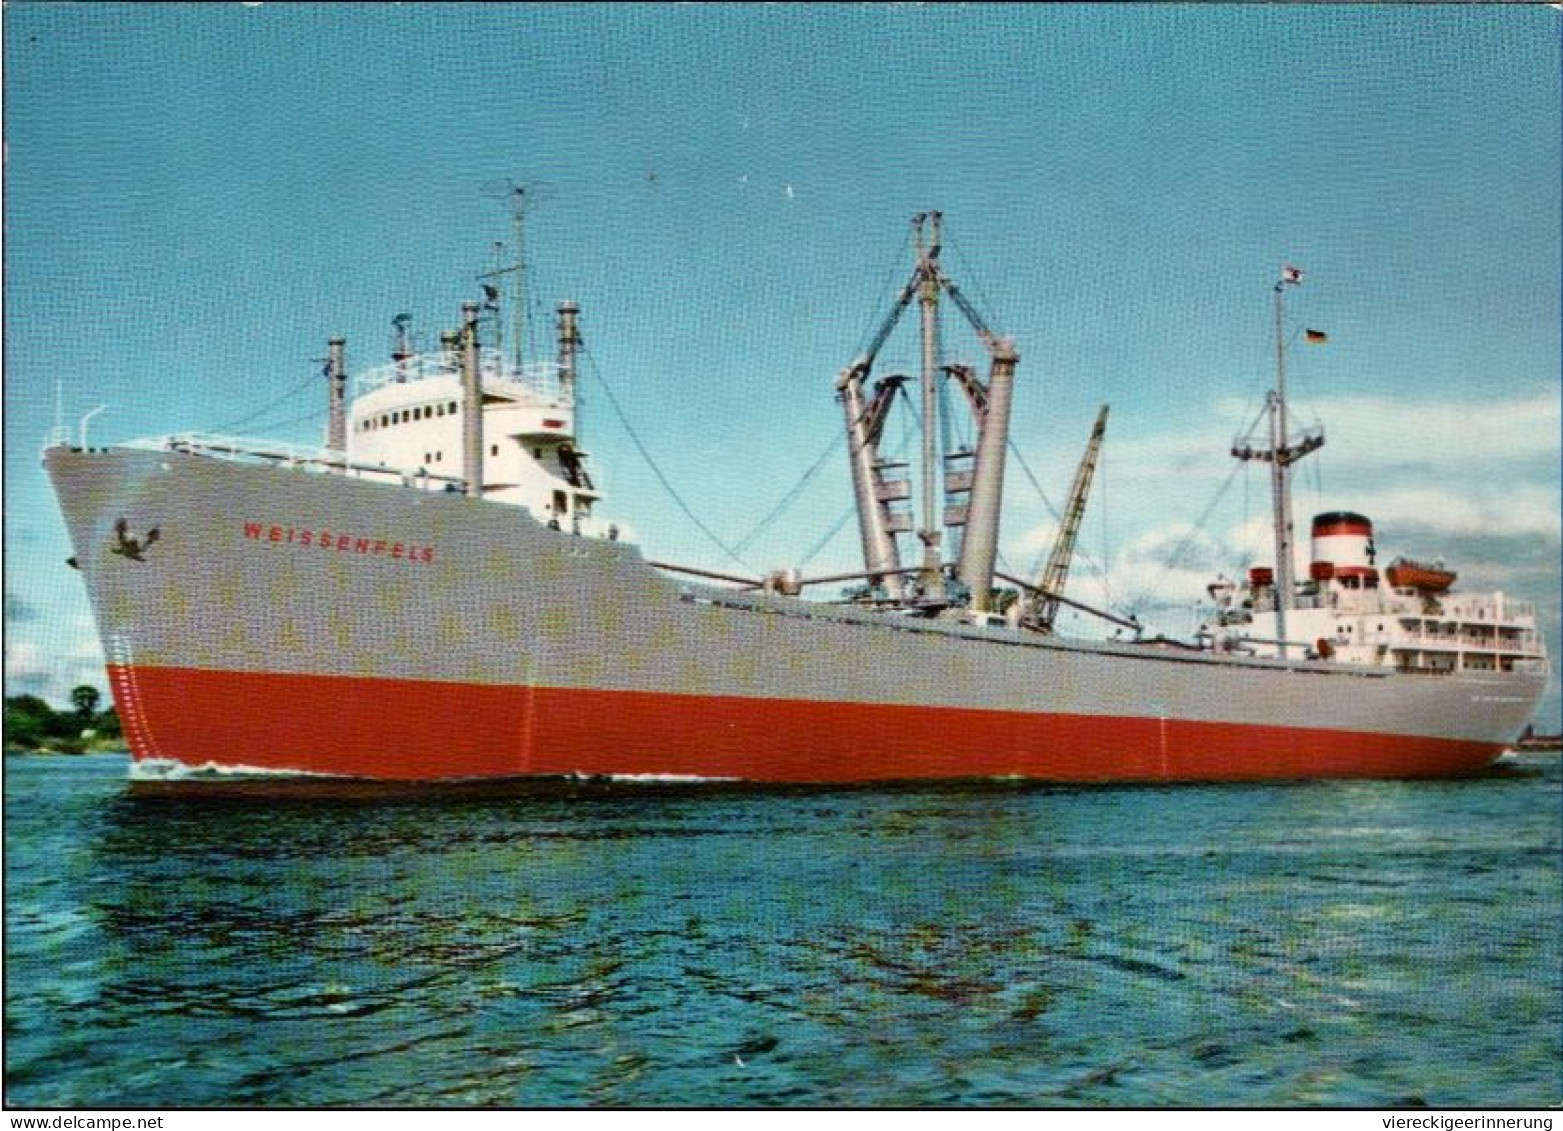 ! Ansichtskarte Ship, DDSG Hansa Bremen, Schiff MS Weissenfels, Frachter - Commerce